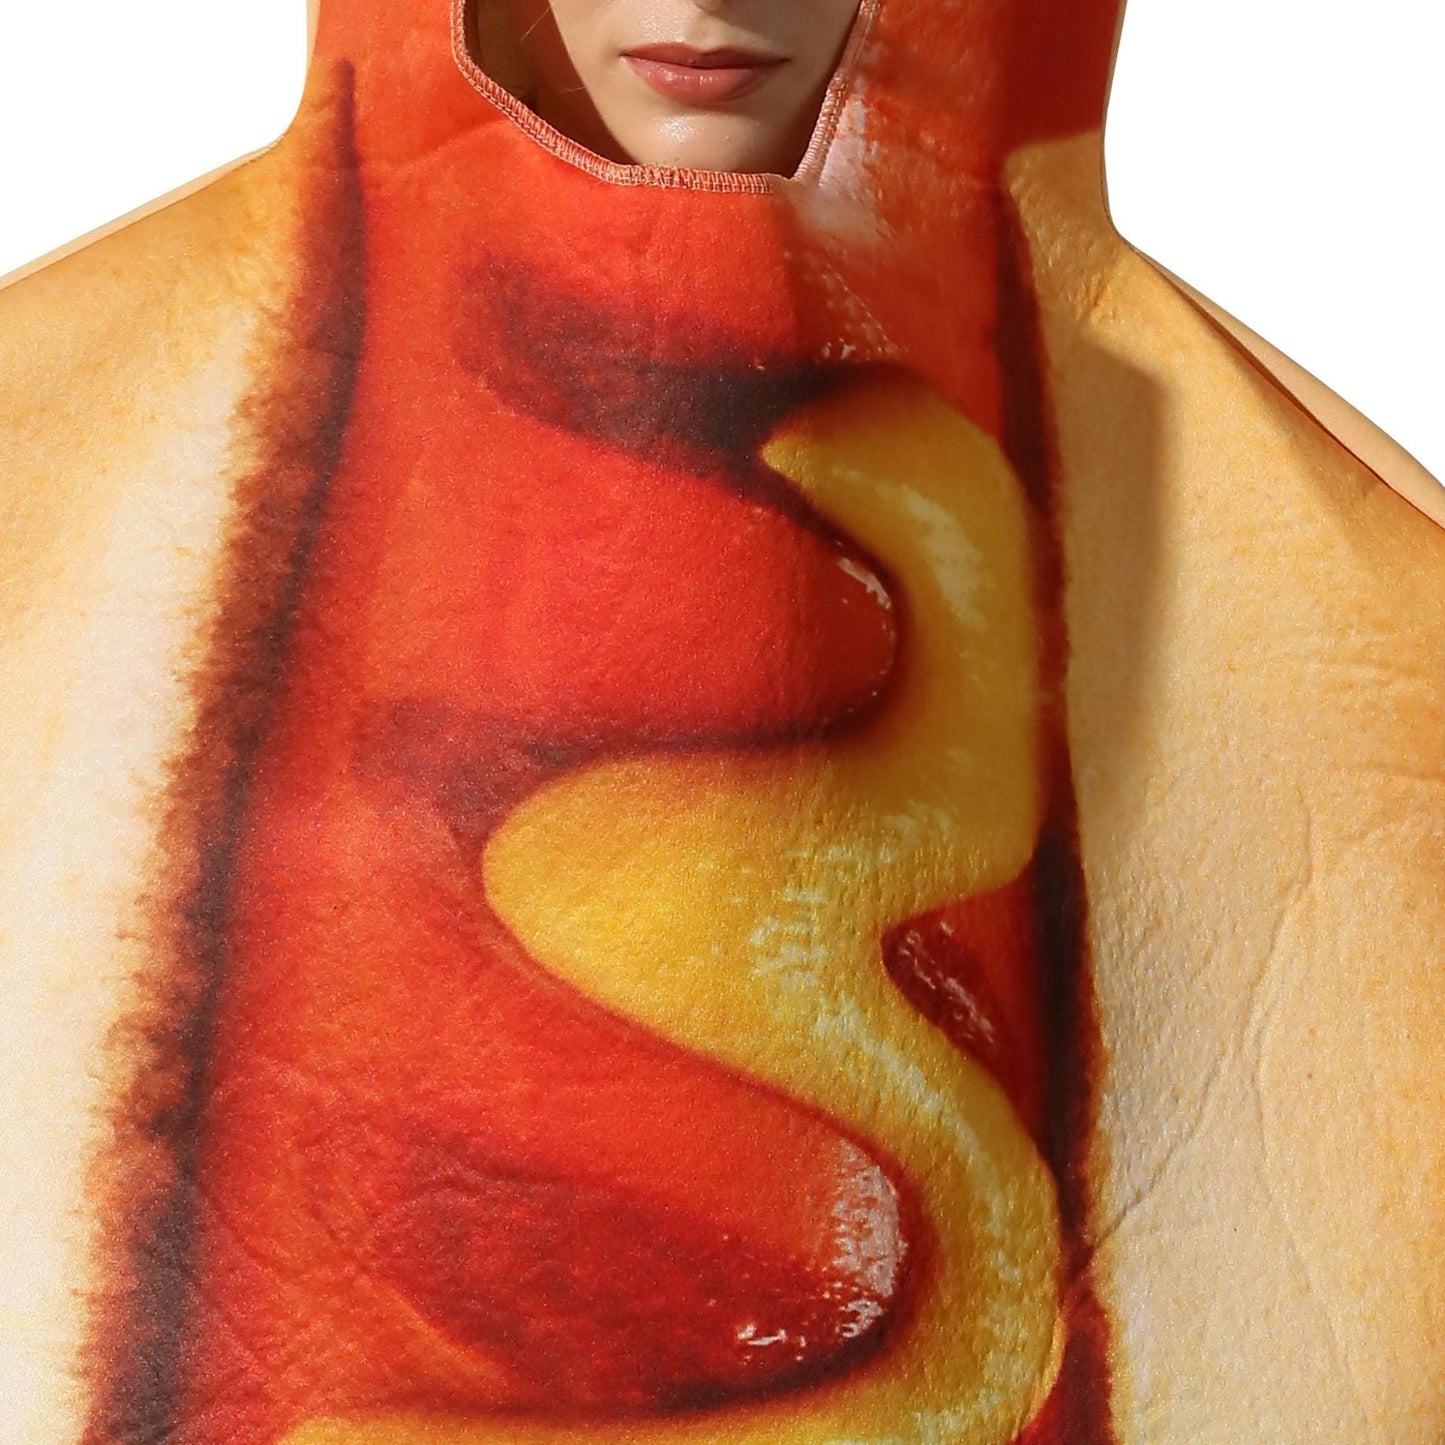 Halloween Hot Dog Cosplay Costume Jumpsuits